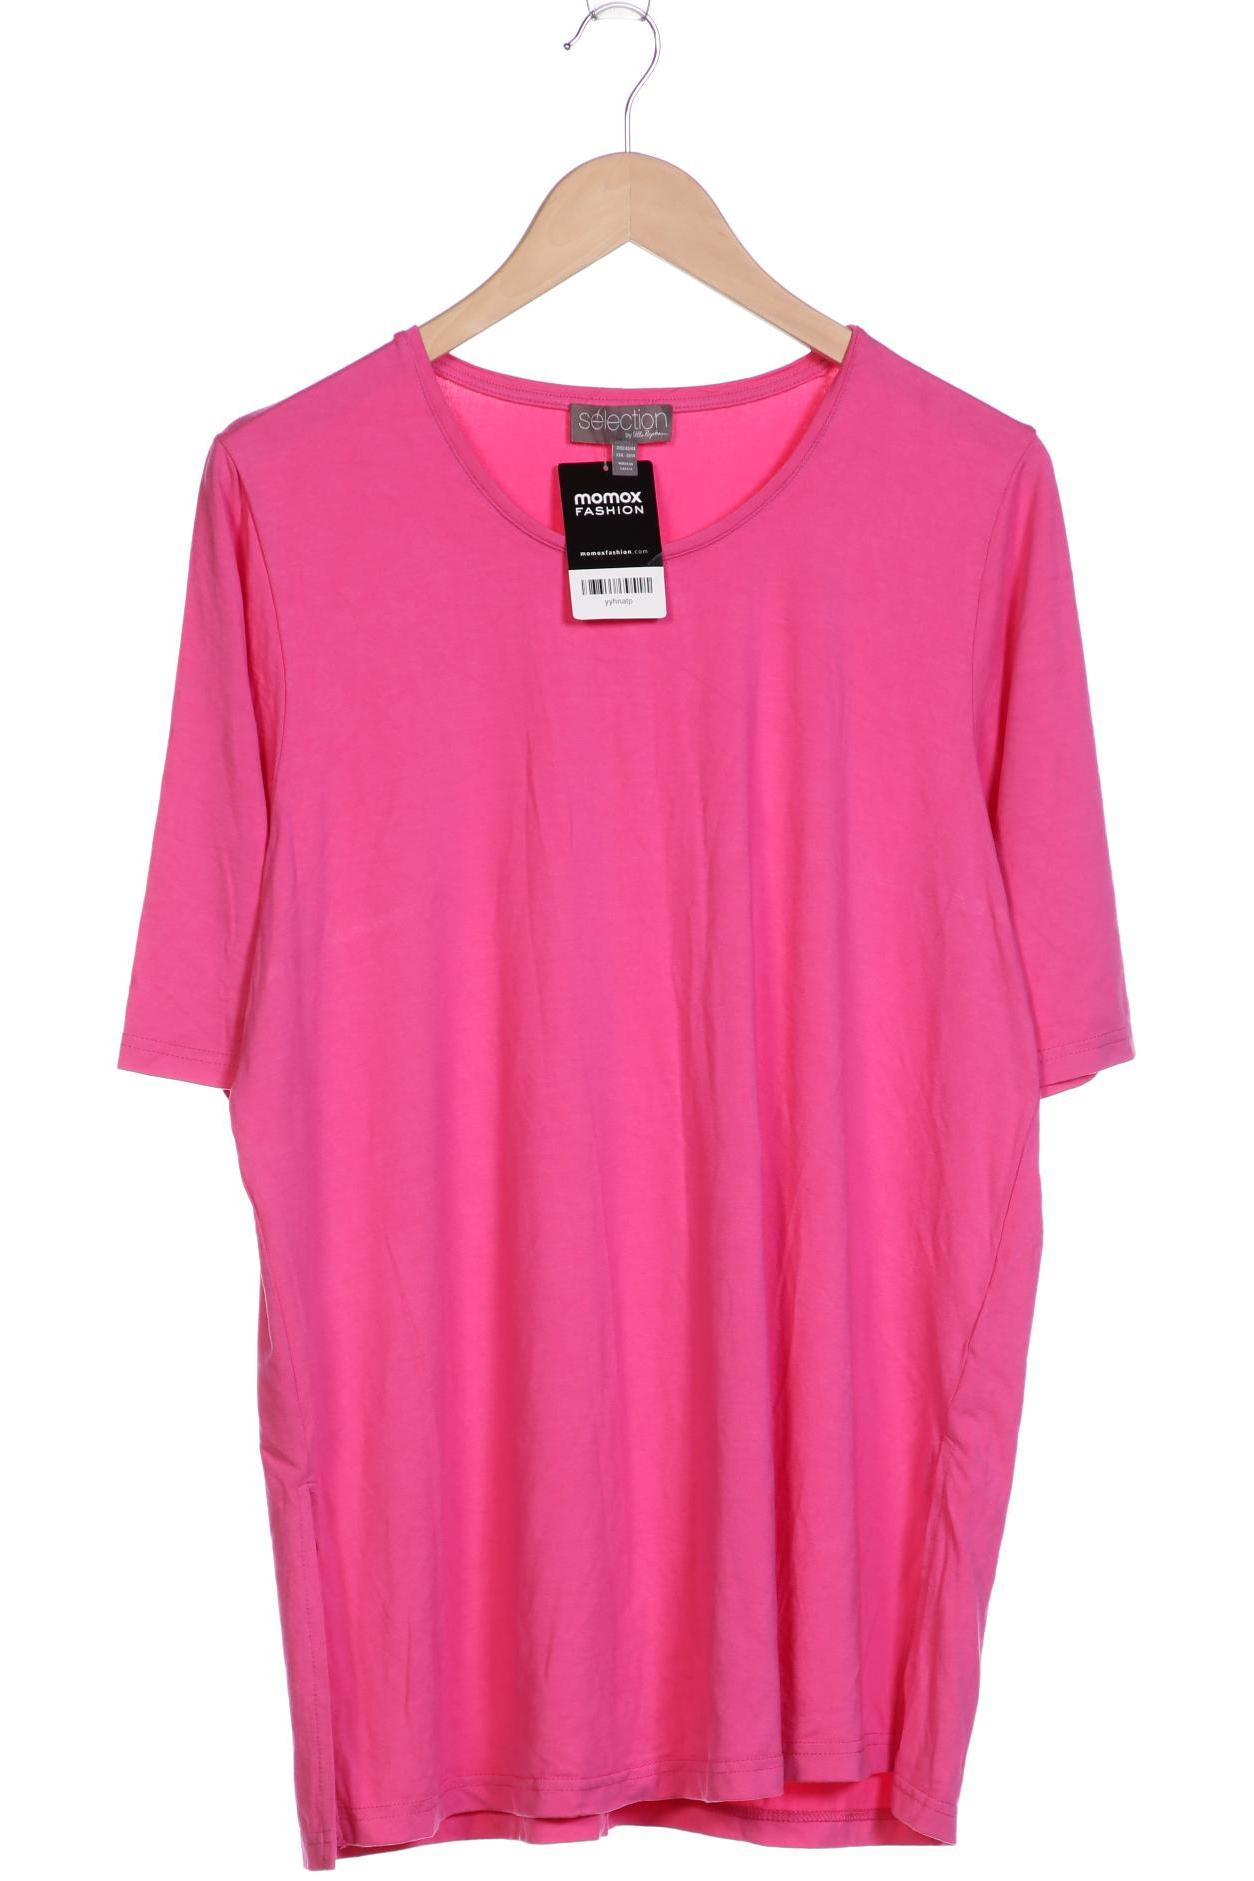 Selection by Ulla Popken Damen T-Shirt, pink von Selection by Ulla Popken